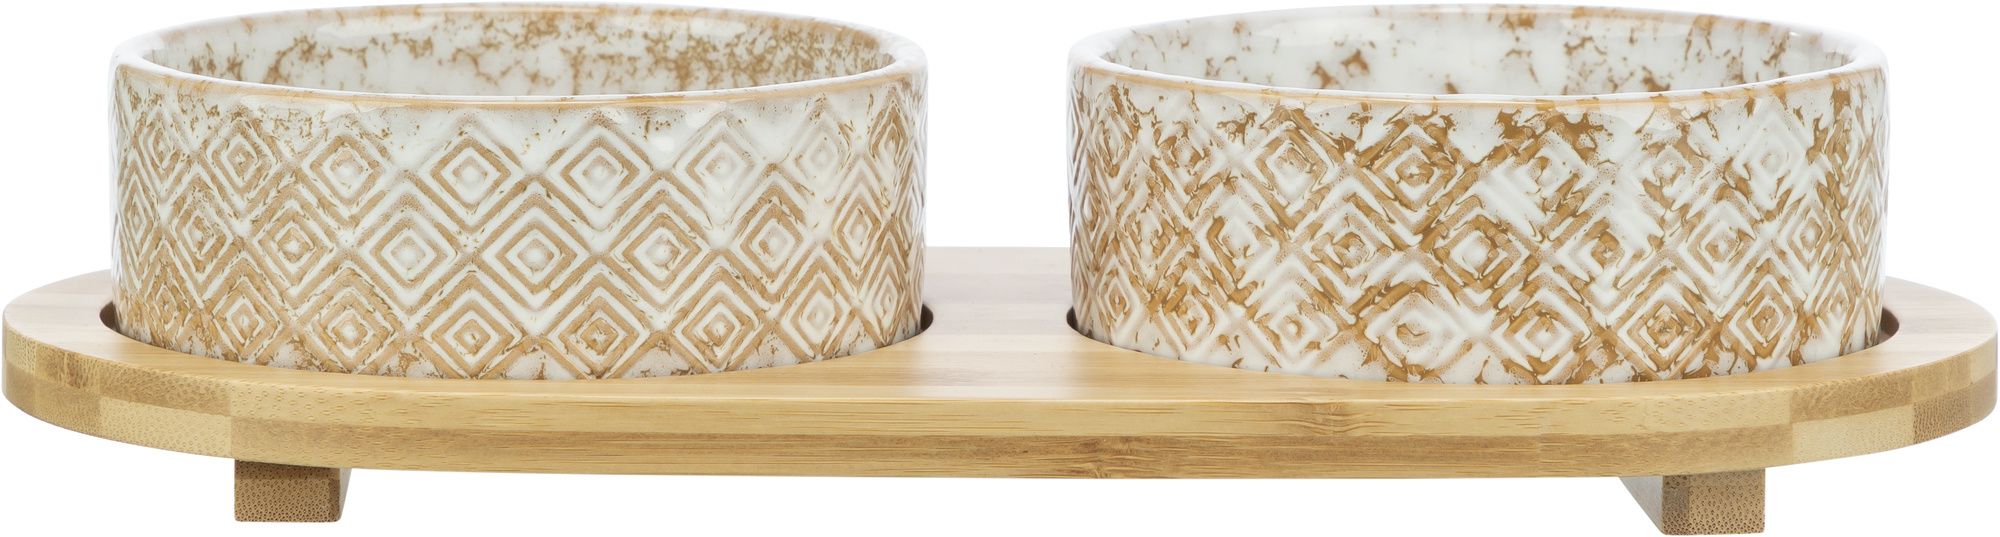 Set de gamelles Trixie en céramique/bambou